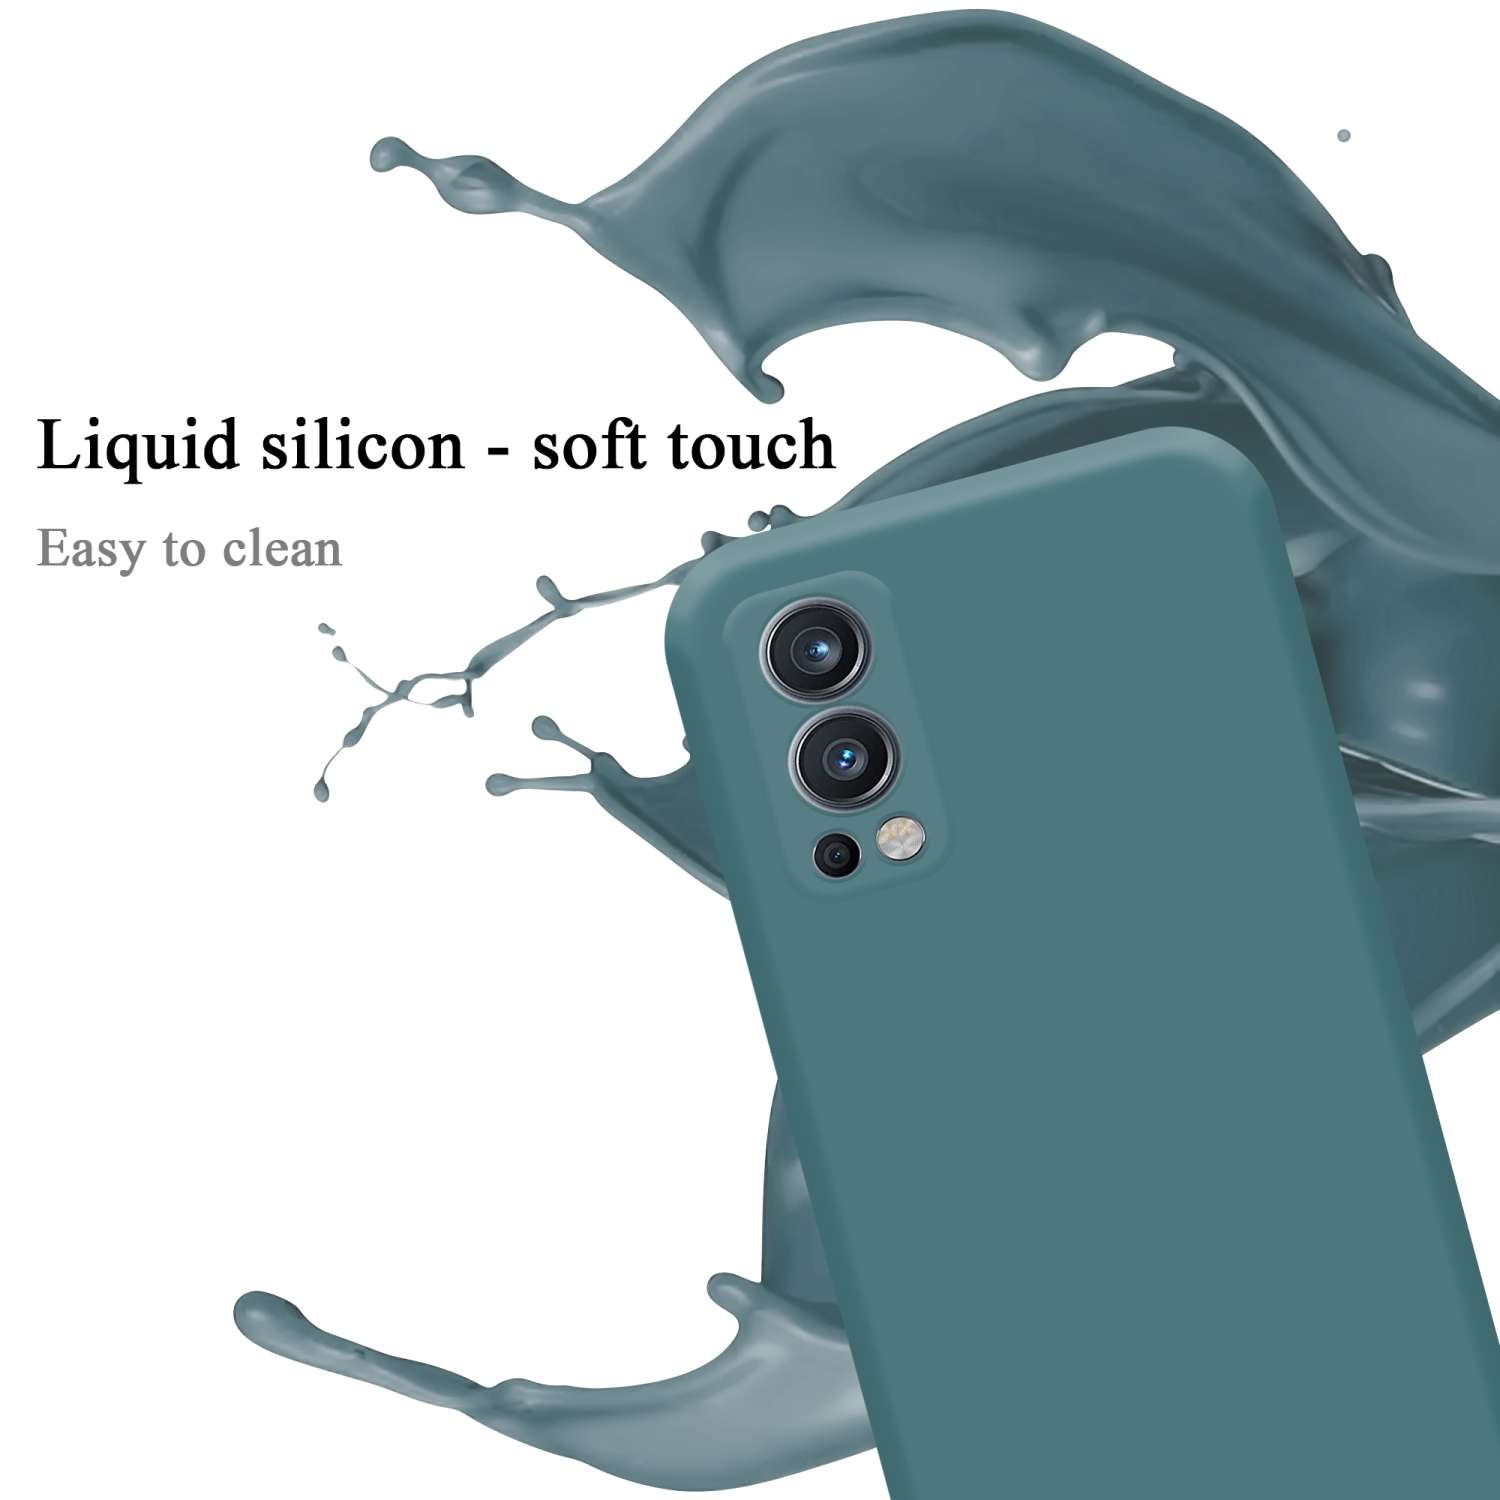 CADORABO Hülle im Liquid Silicone Nord Backcover, Case 2 OnePlus, 5G, LIQUID GRÜN Style